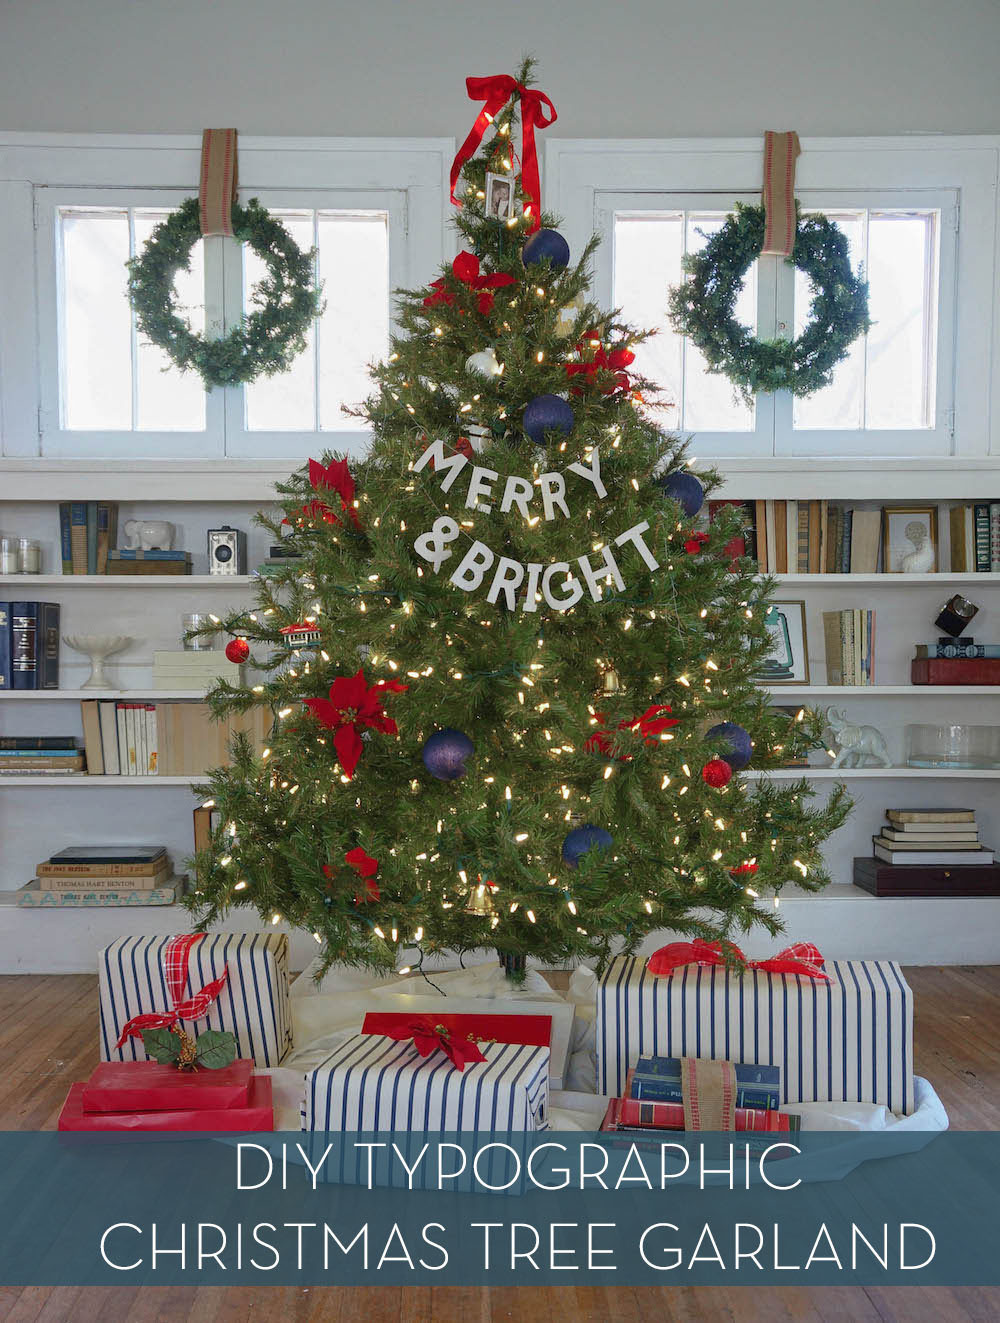 DIY Christmas Tree Garland
 Make It DIY Christmas Tree Typographic Garland